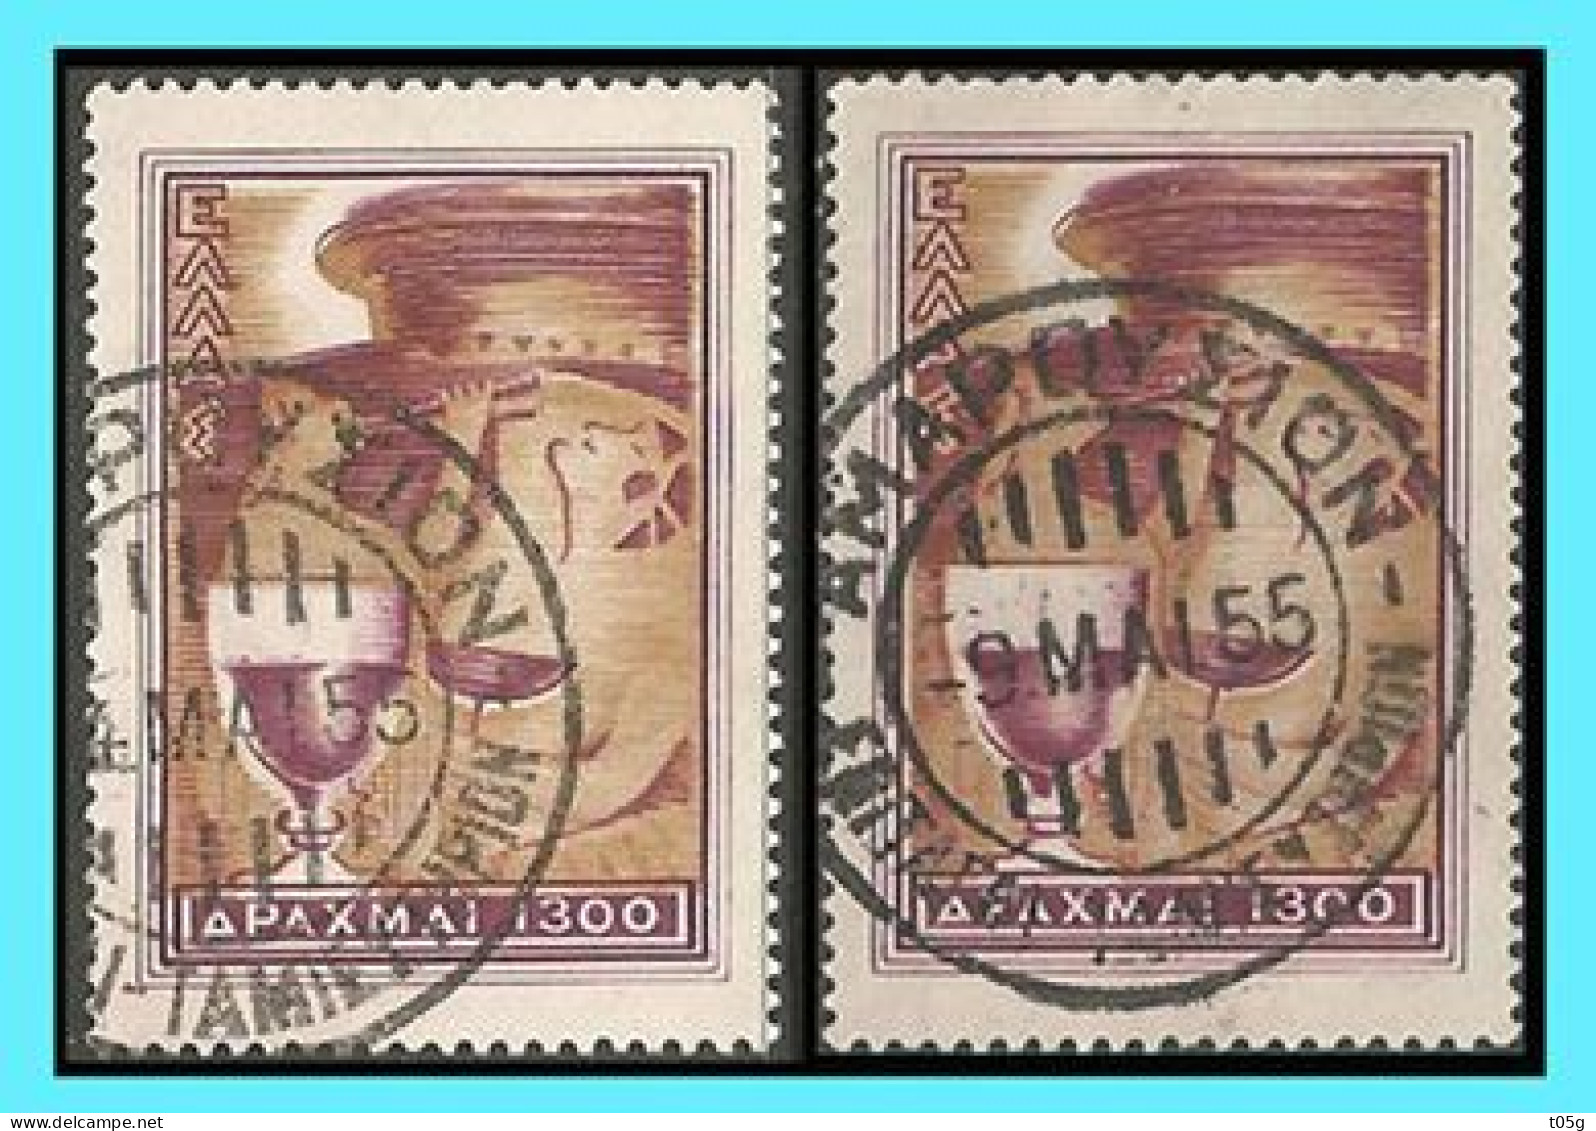 GREECE- GRECE - HELLAS 1953 : Cancellation  (AMAROUSION 4 MAI 55 SAVINGS BANK) - Postmarks - EMA (Printer Machine)